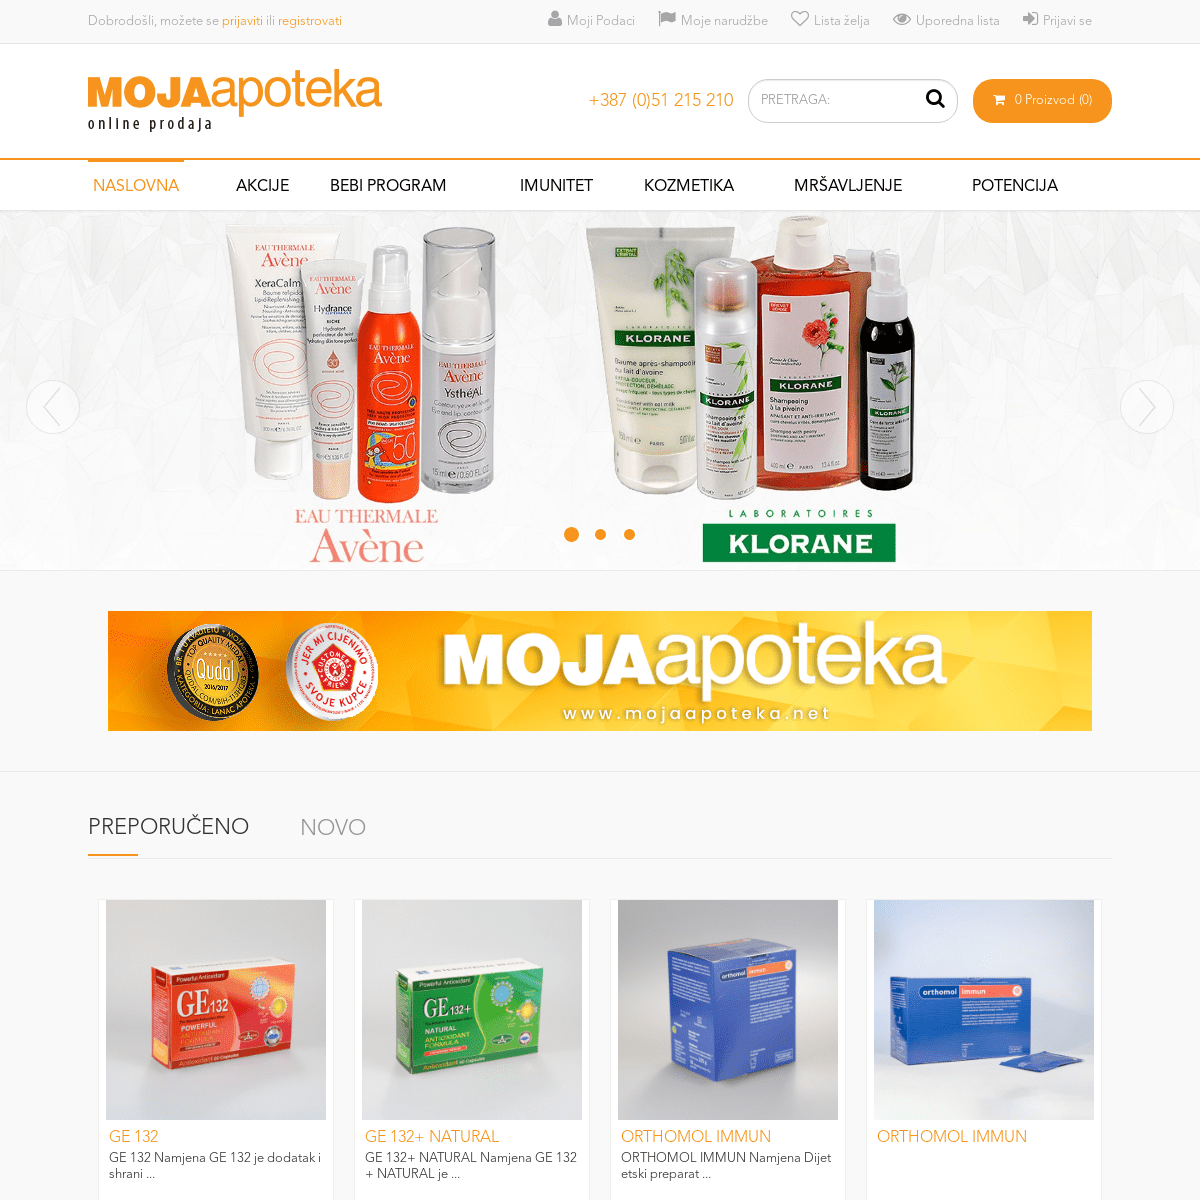 A complete backup of mojaapoteka-webshop.net